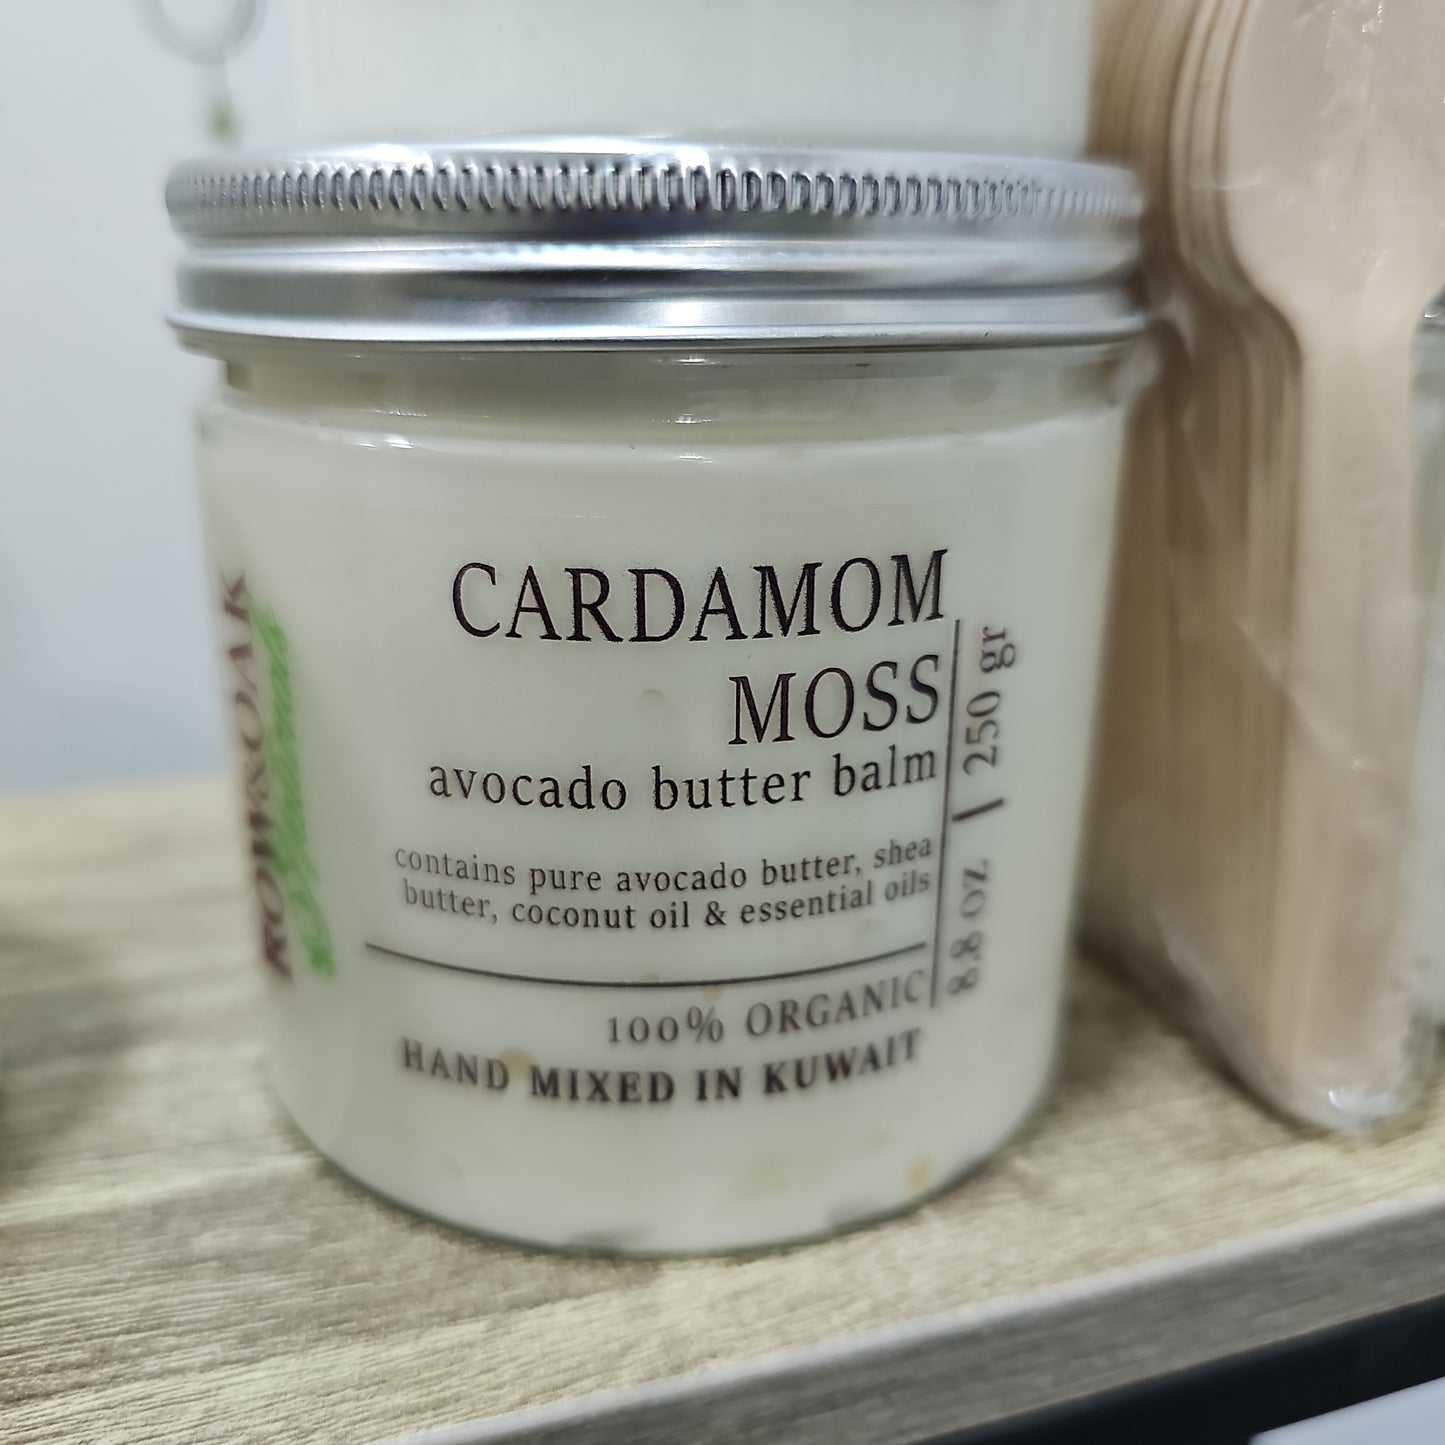 Cardamom Moss